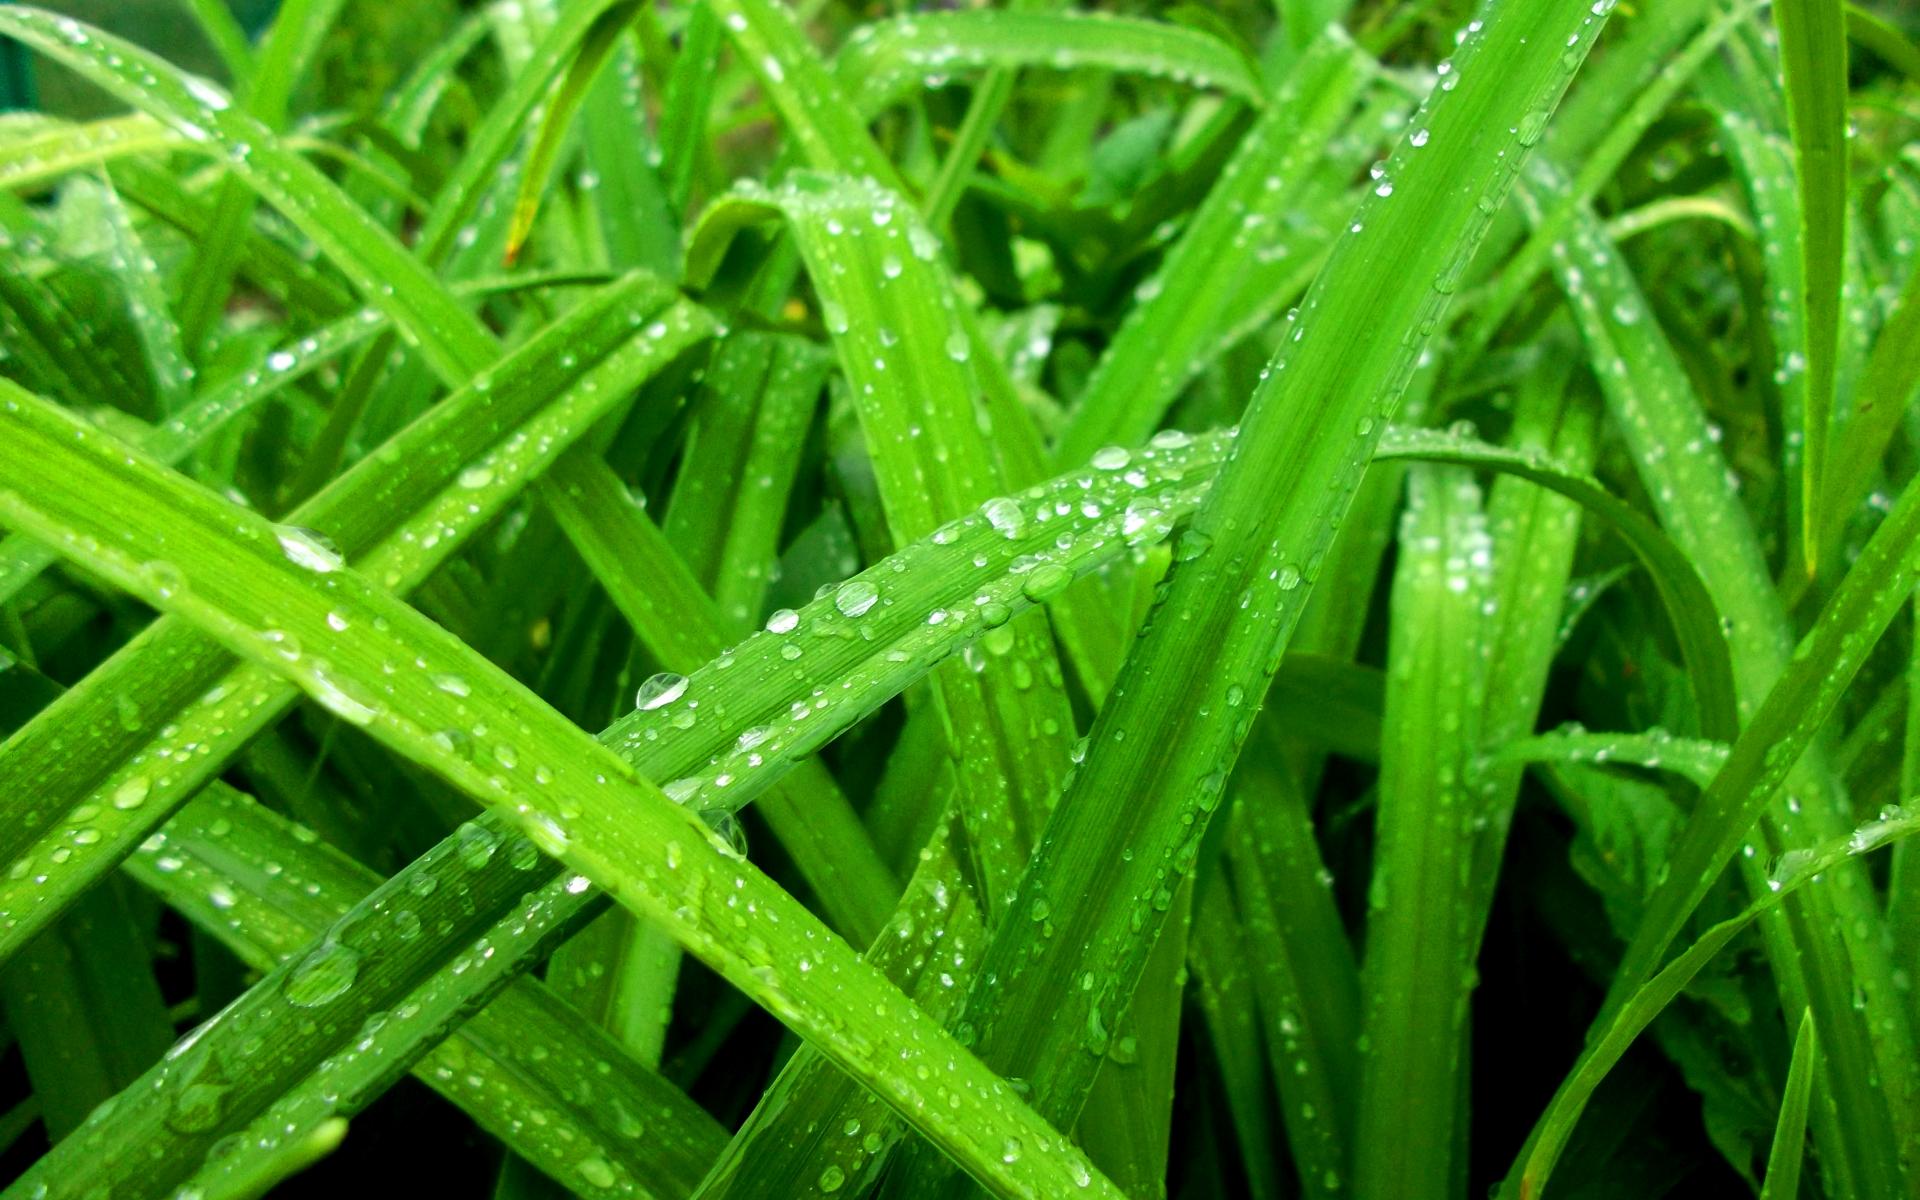  water drops green grass color rain spring seasons wallpaper background